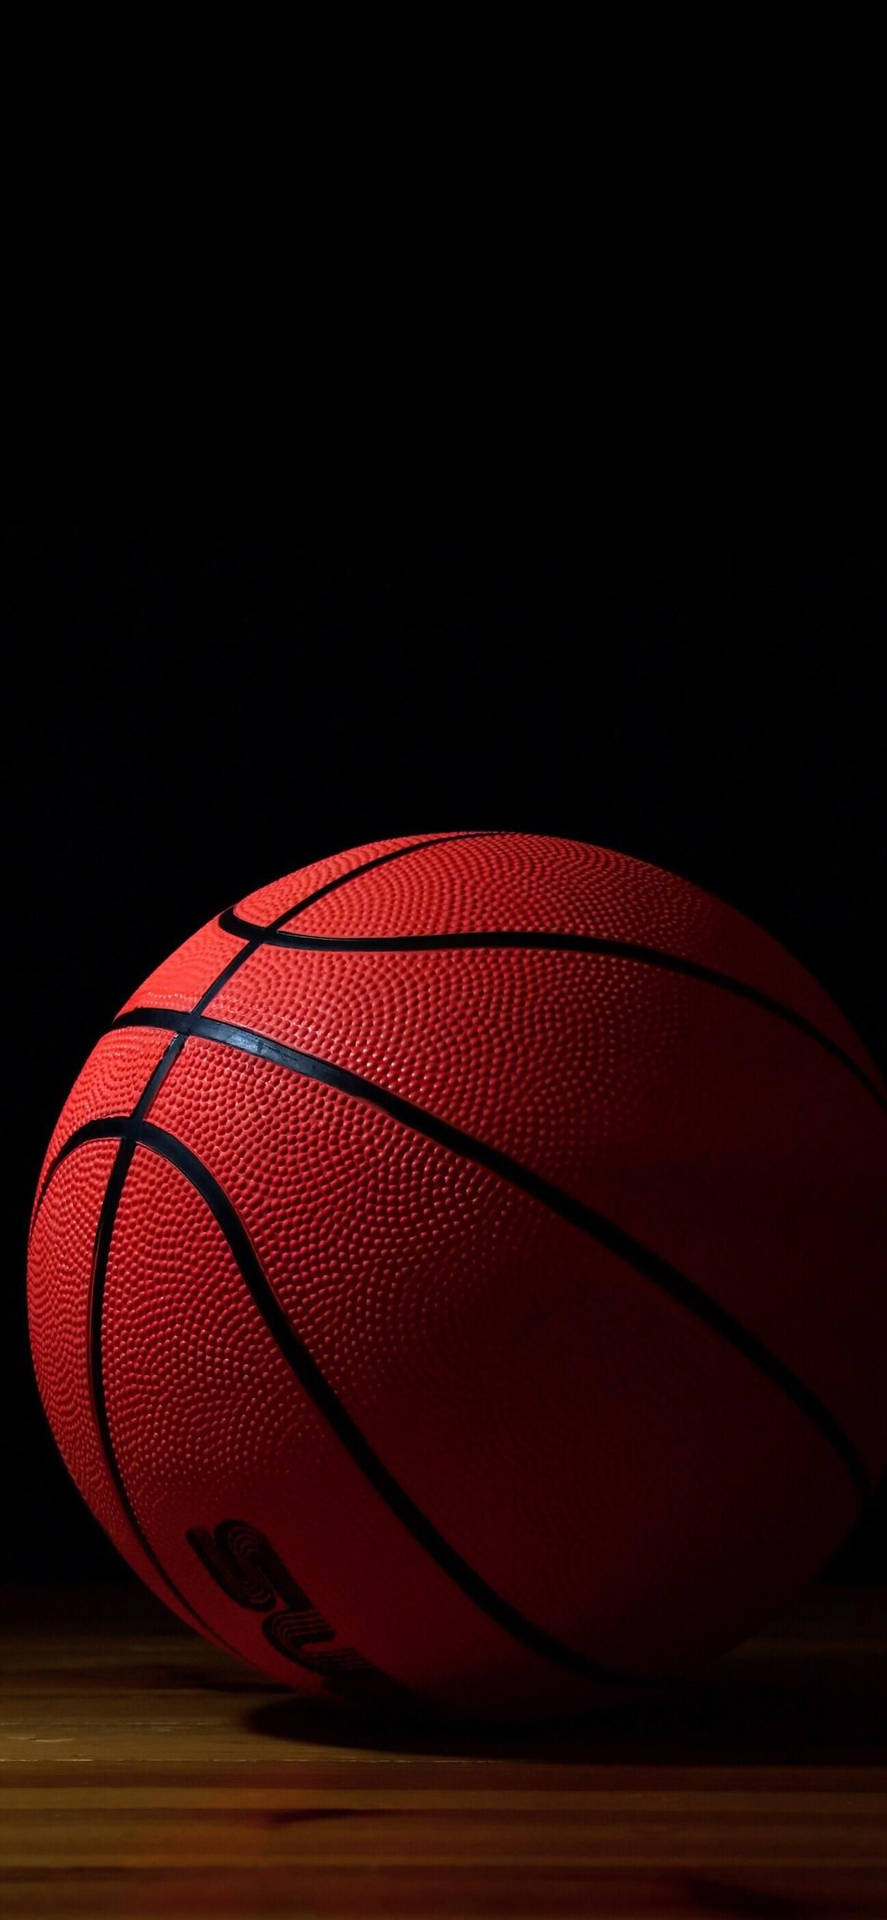 Basketball On The Hardwood Floor Sports iPhone Wallpaper